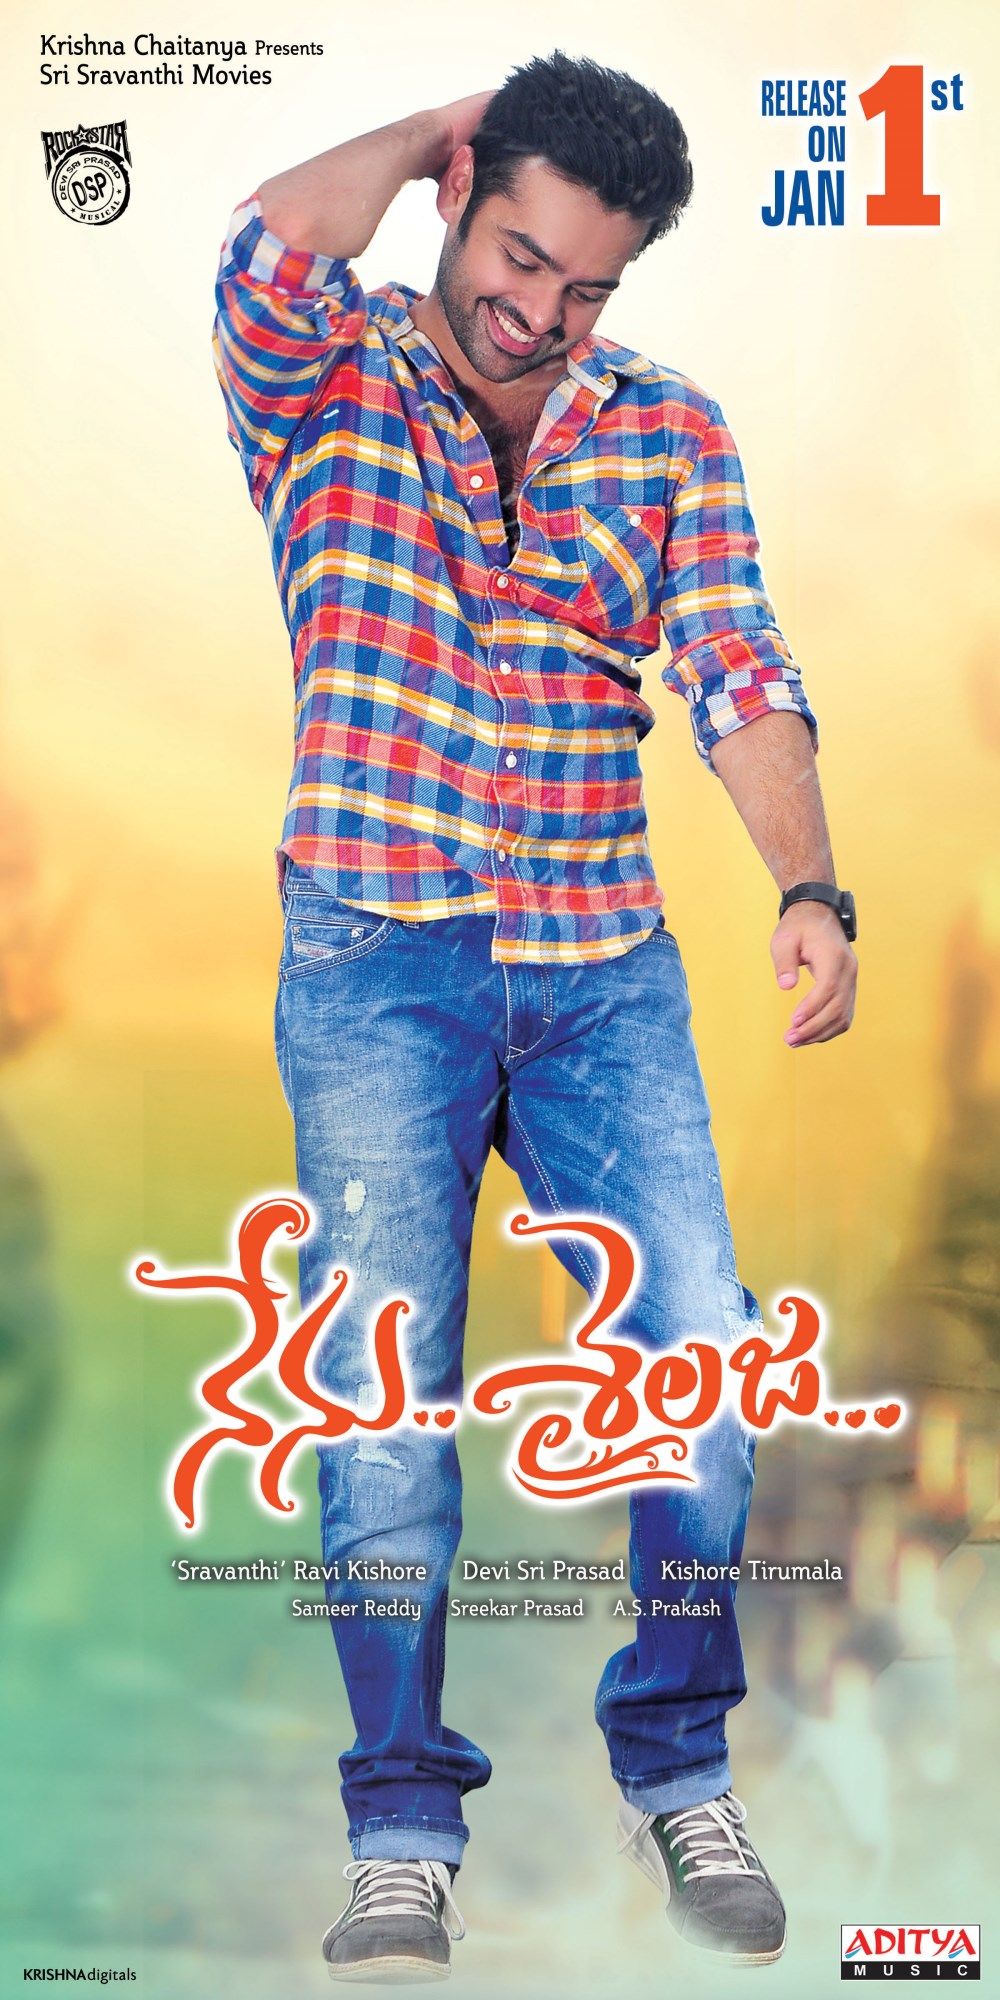 Nenu Sailaja Movie Release Posters & Wallpaper. New Movie Posters